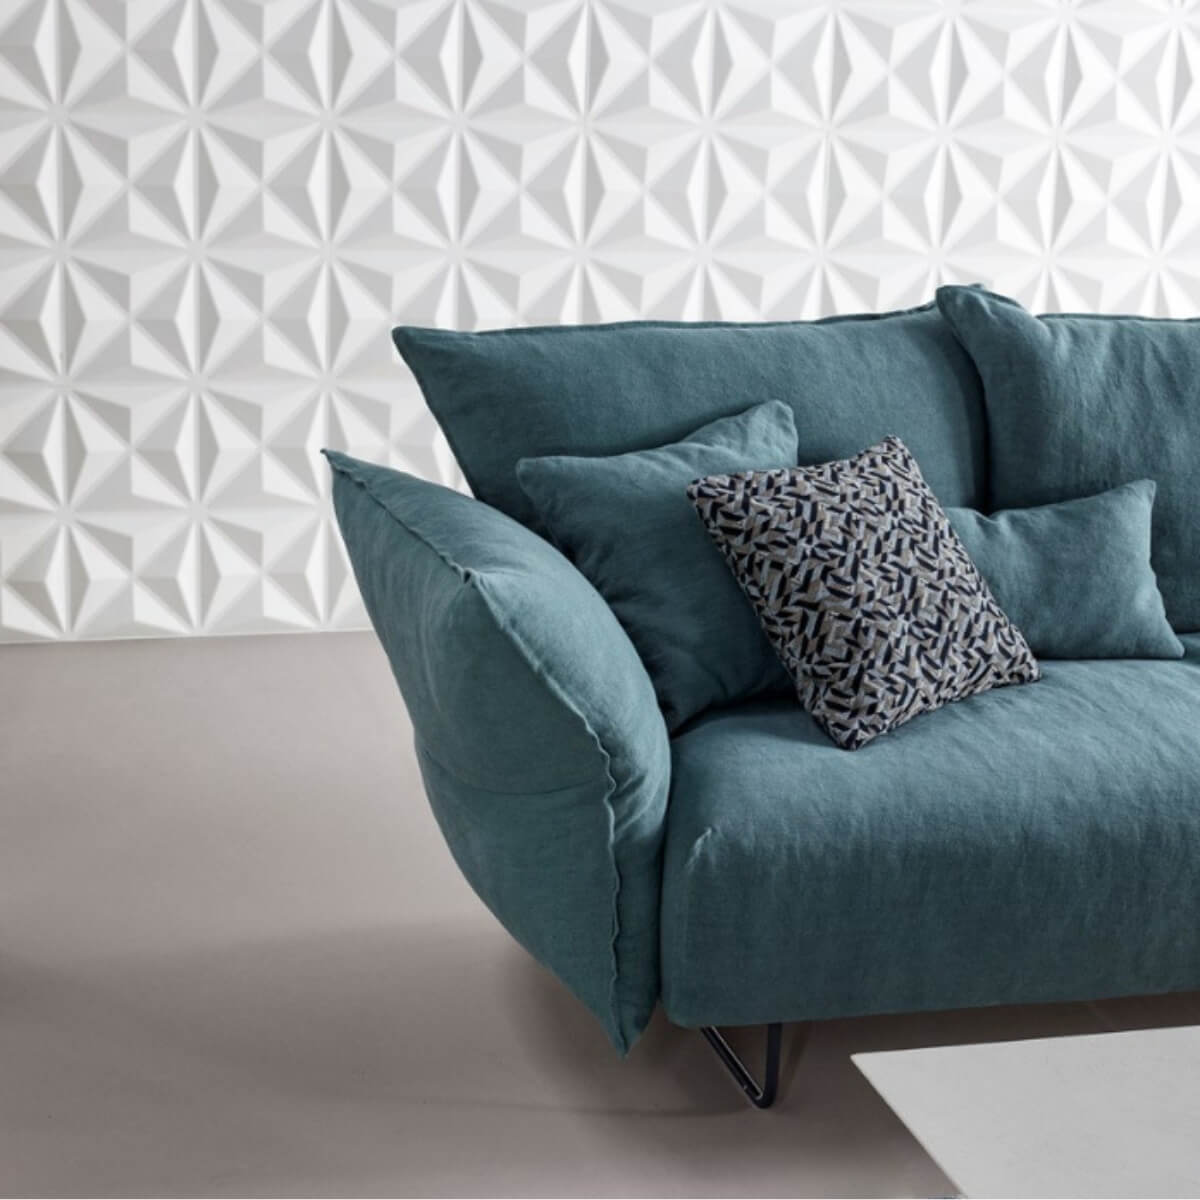 Epicurean Enclave Cotton Linen Sofa: A Pillow Palace of Comfort and Style